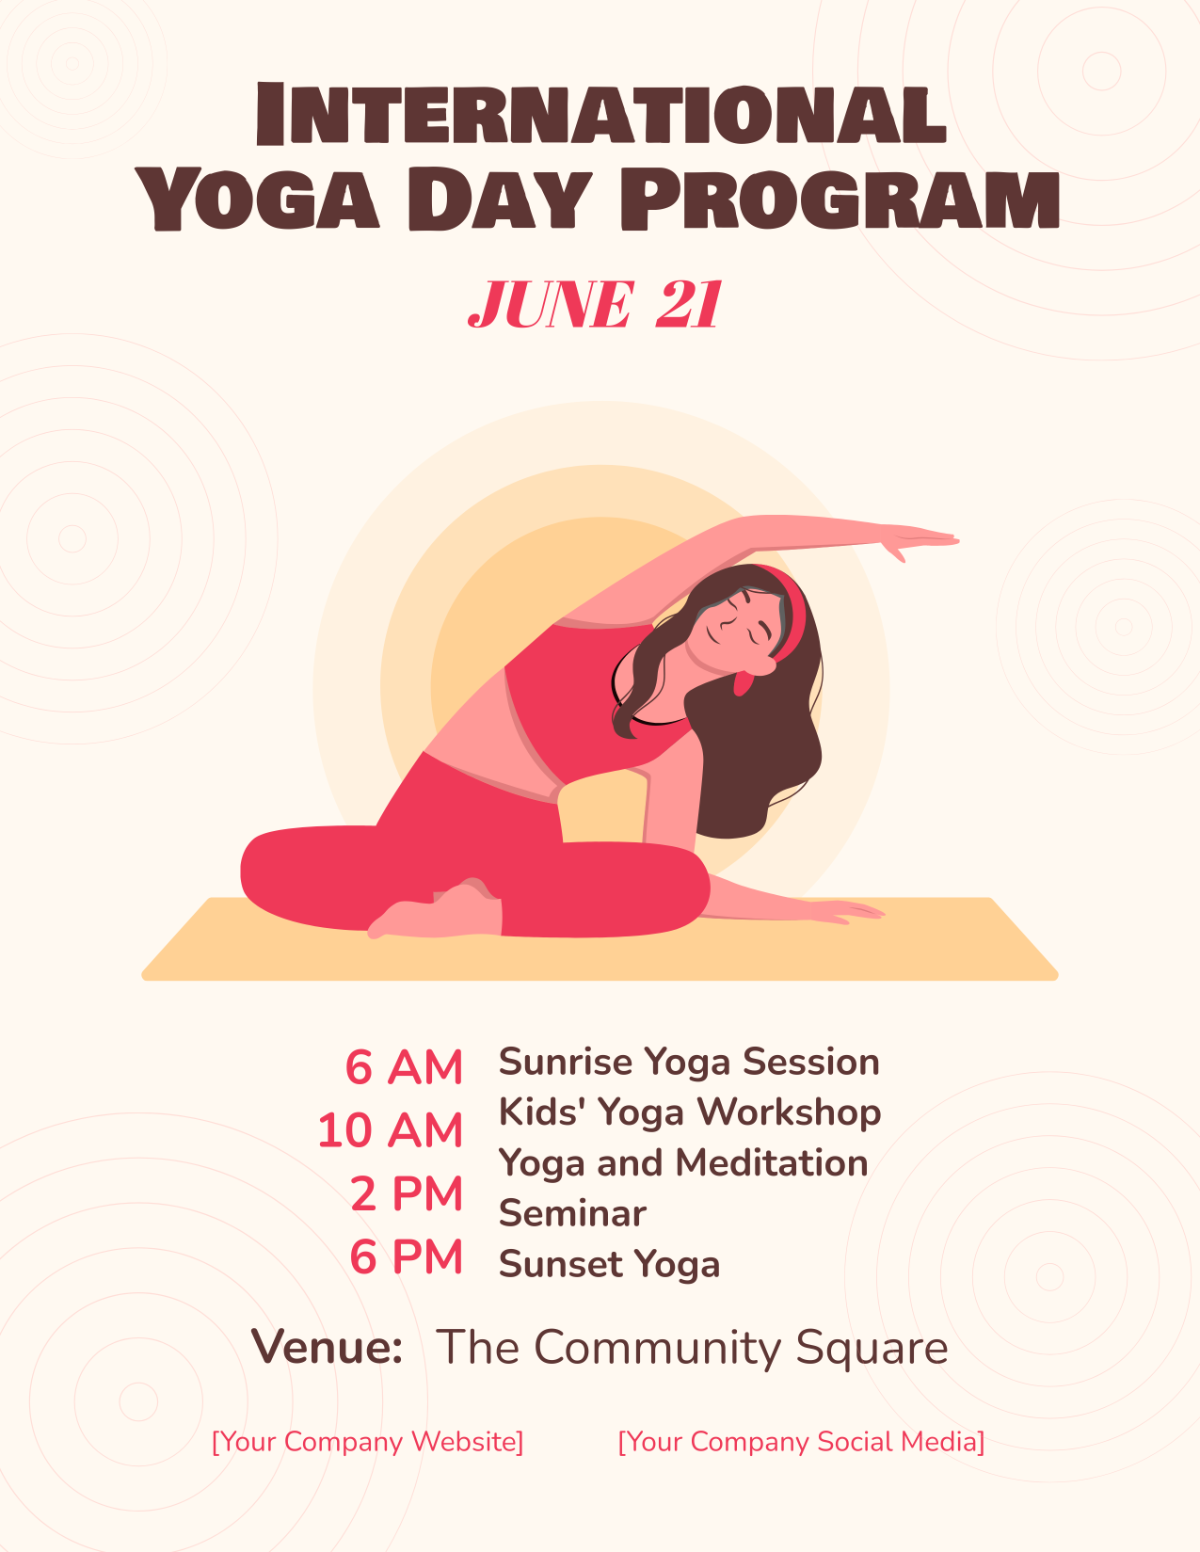 International Yoga Day Program Schedule